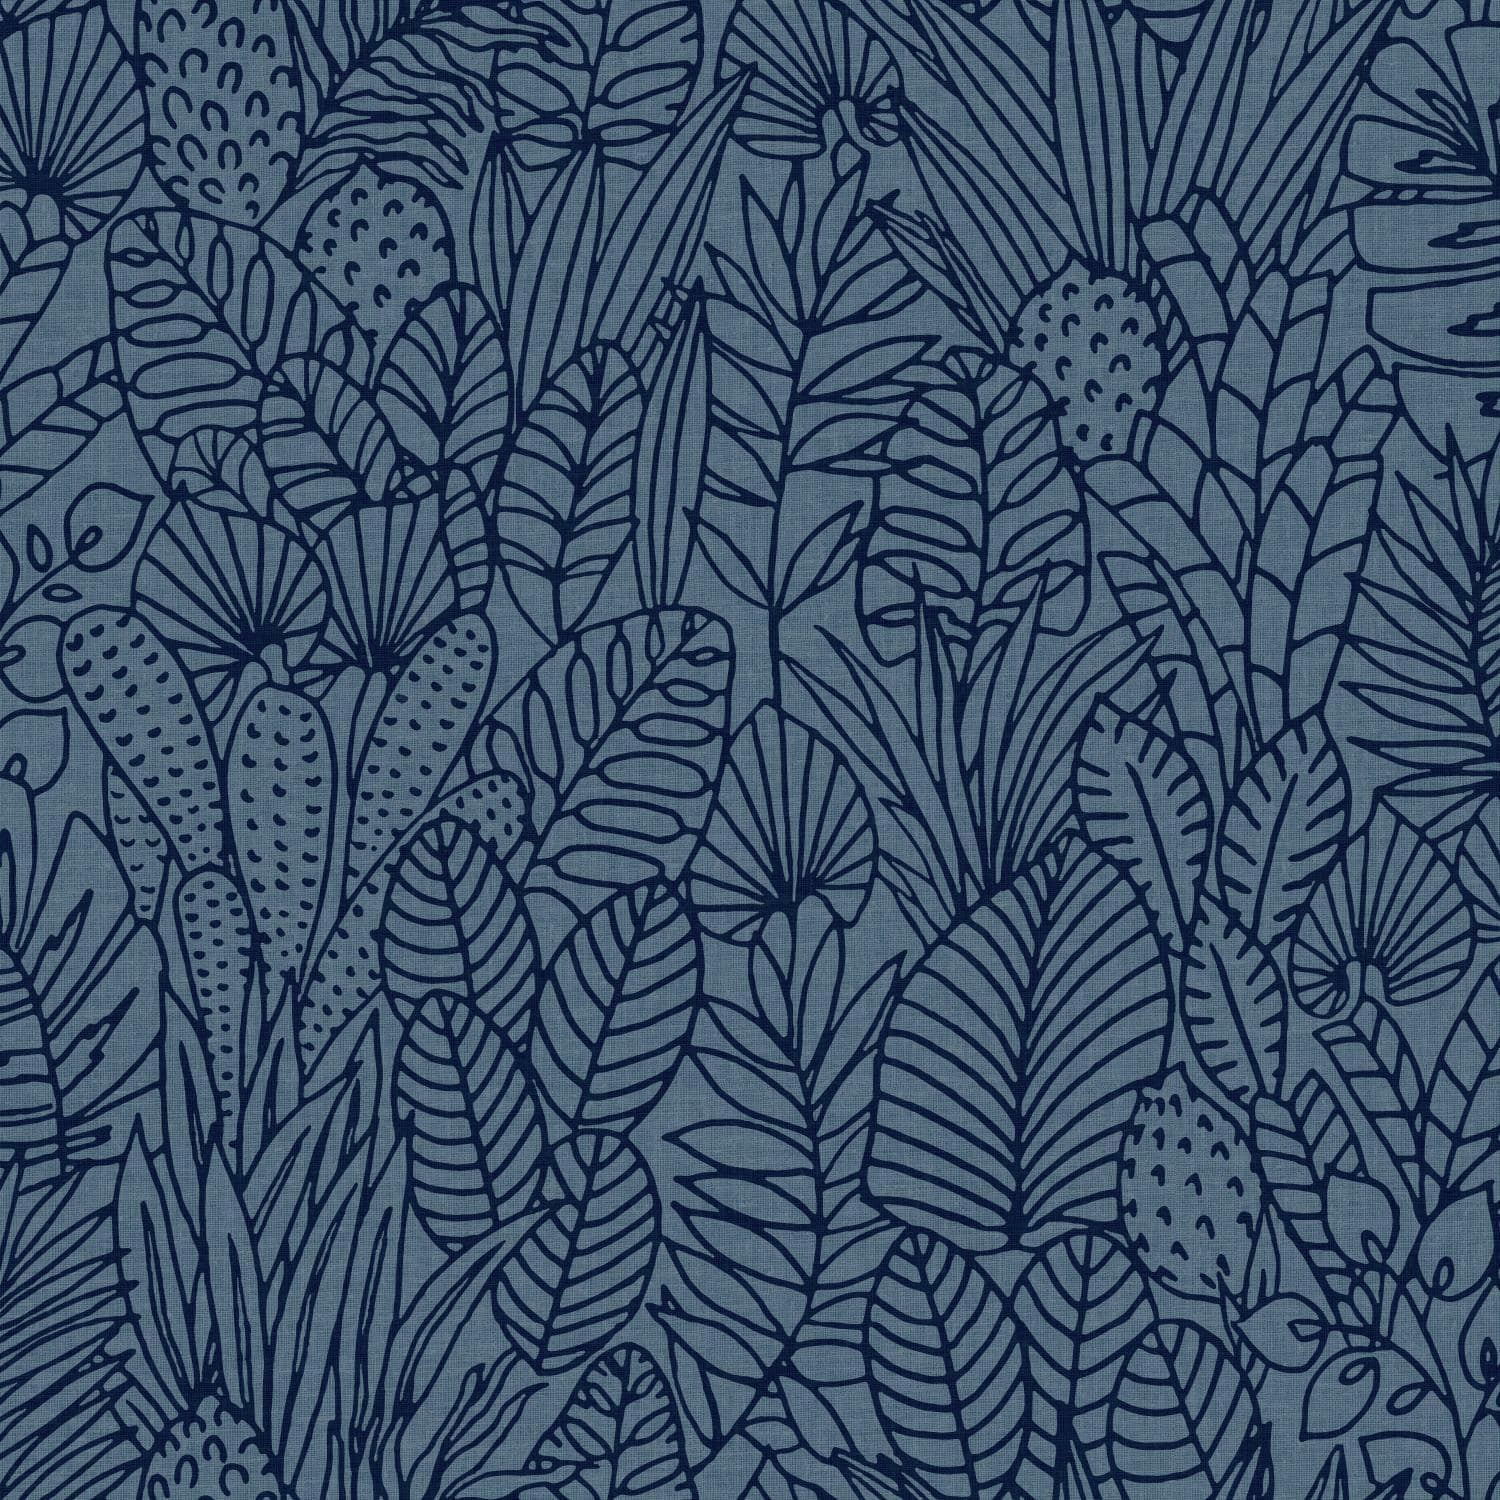 RoomMates Tropical Leaves Sketch Peel & Stick Wallpaper